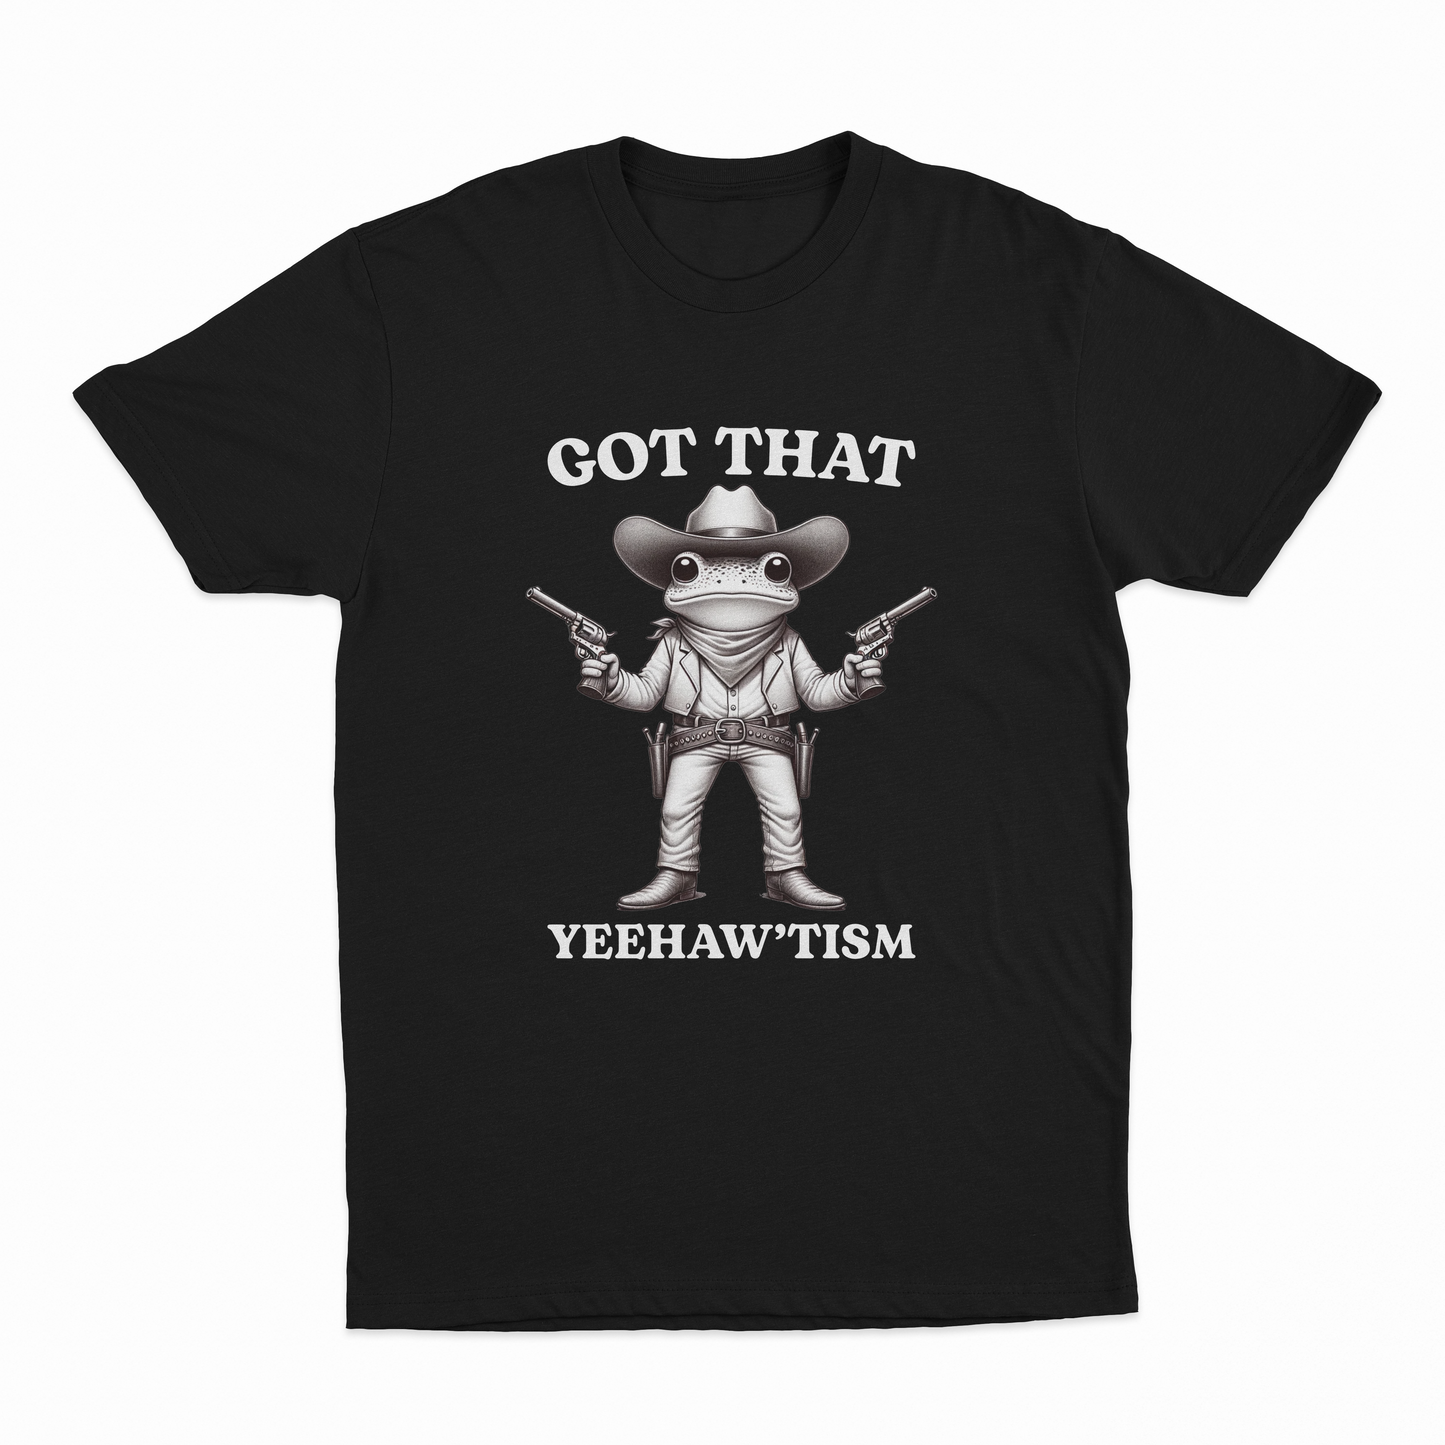 Got That Yeehaw'Tism T-Shirt